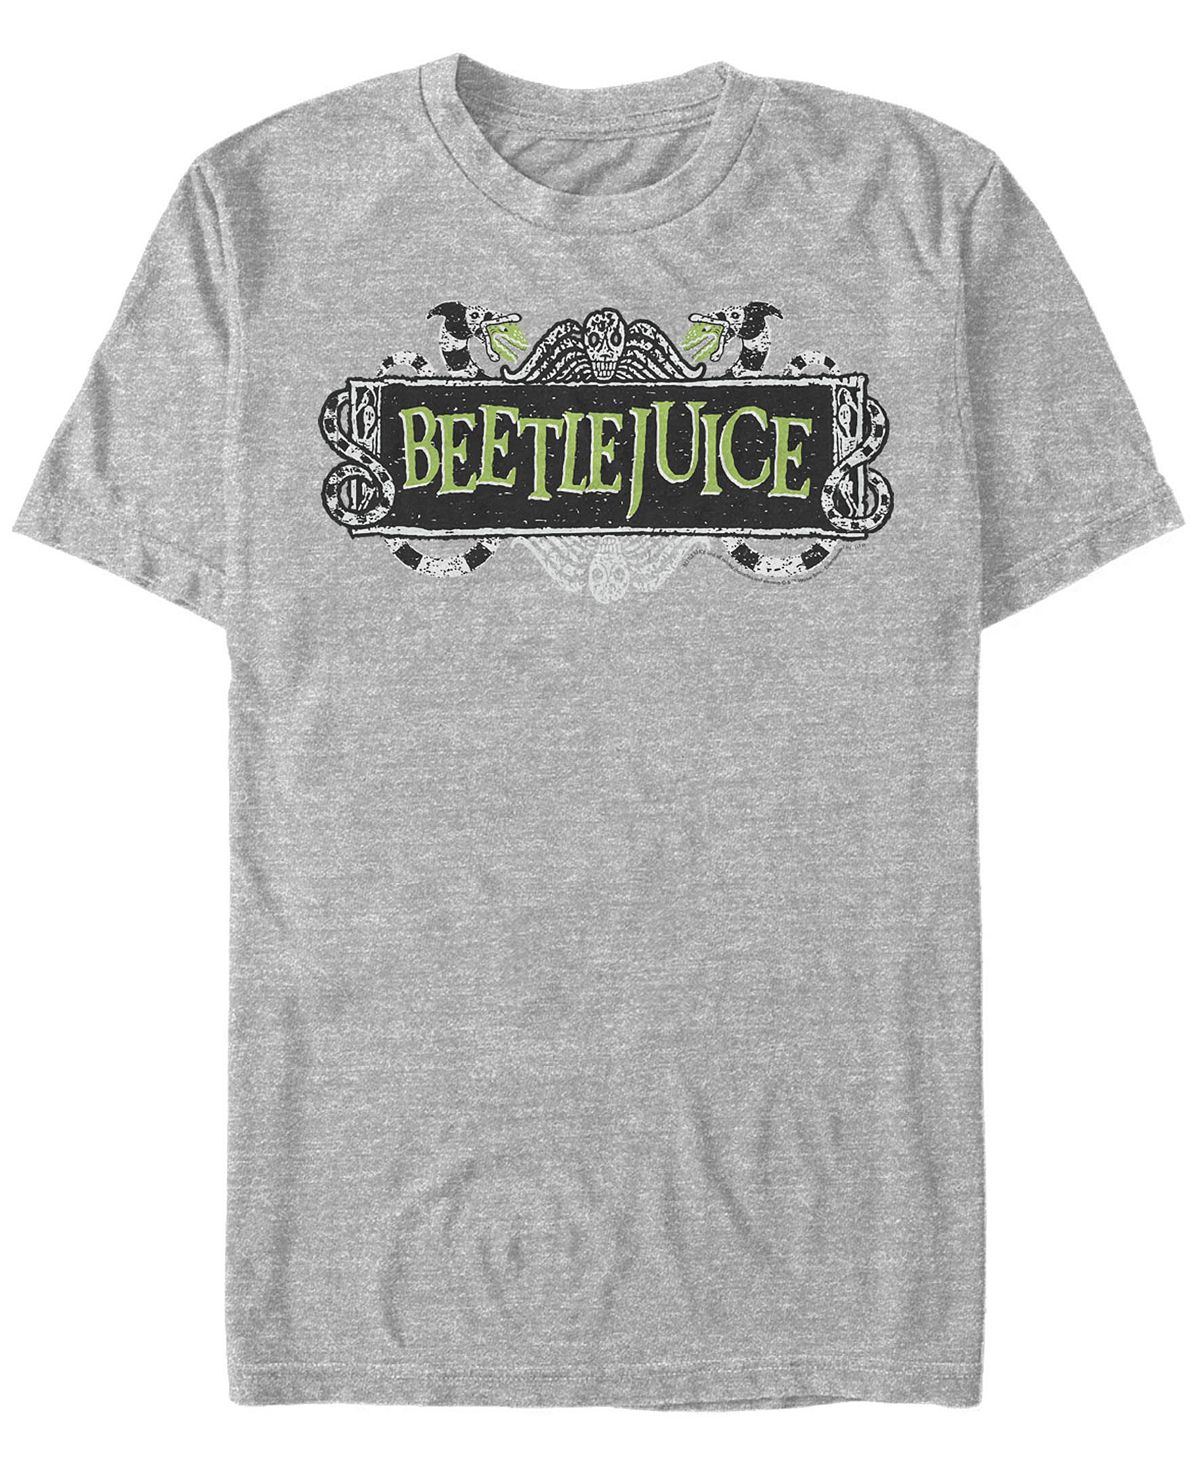 abystyle кружка beetlejuice heat change beetlejuice Мужская футболка с коротким рукавом с логотипом beetlejuice beetlejuice Fifth Sun, мульти